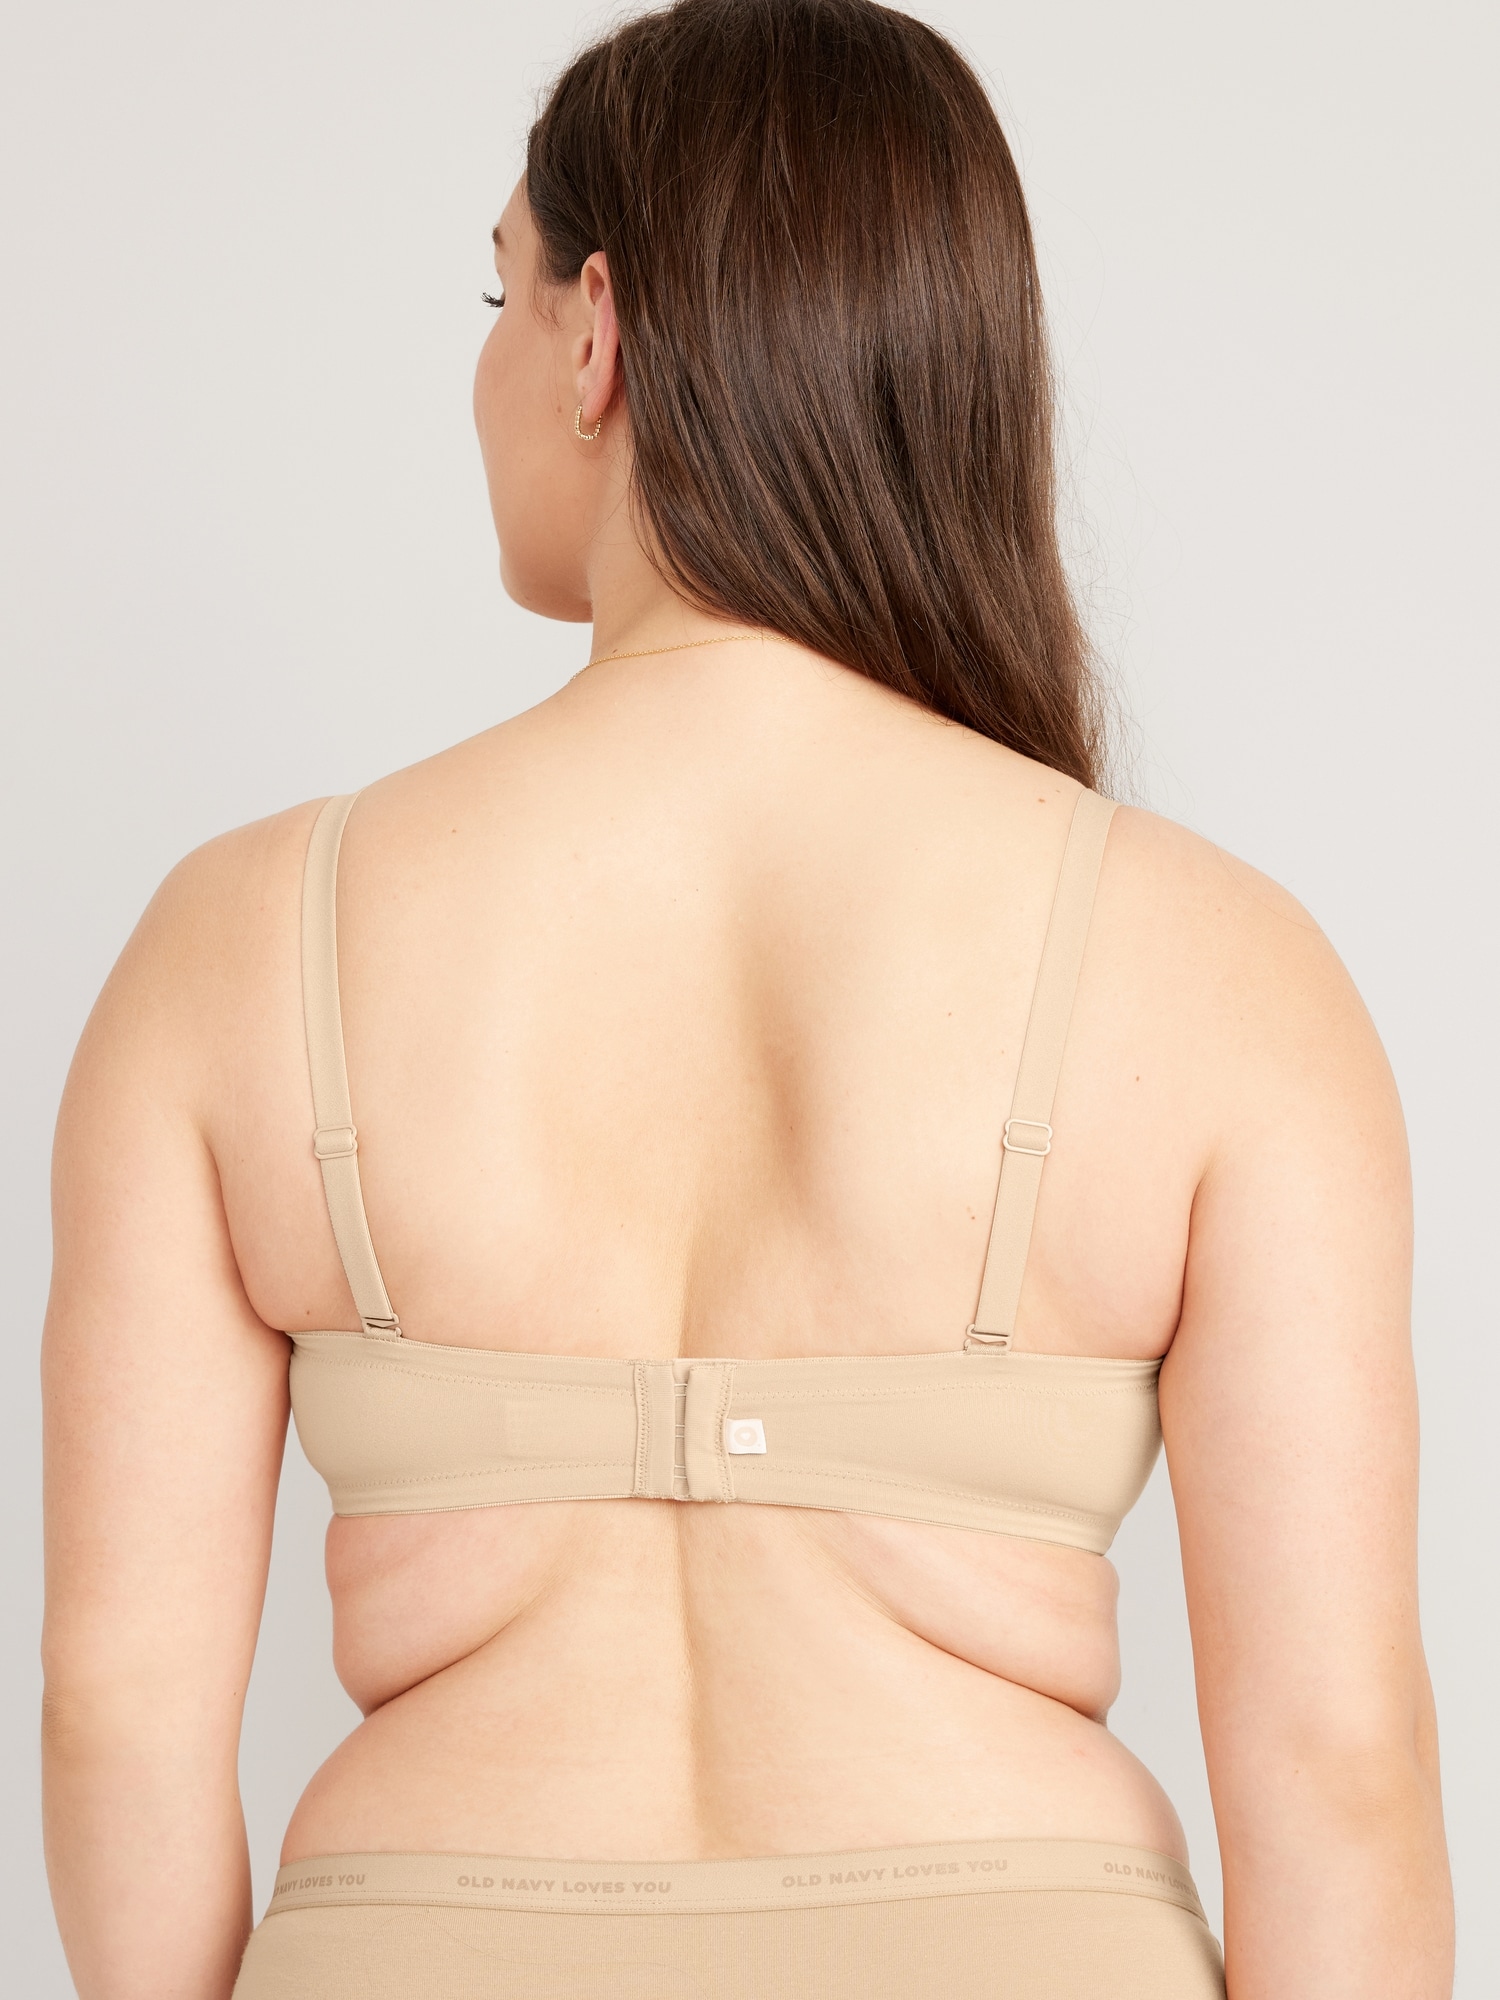 strapless bra - Buy strapless bra Online Starting at Just ₹177